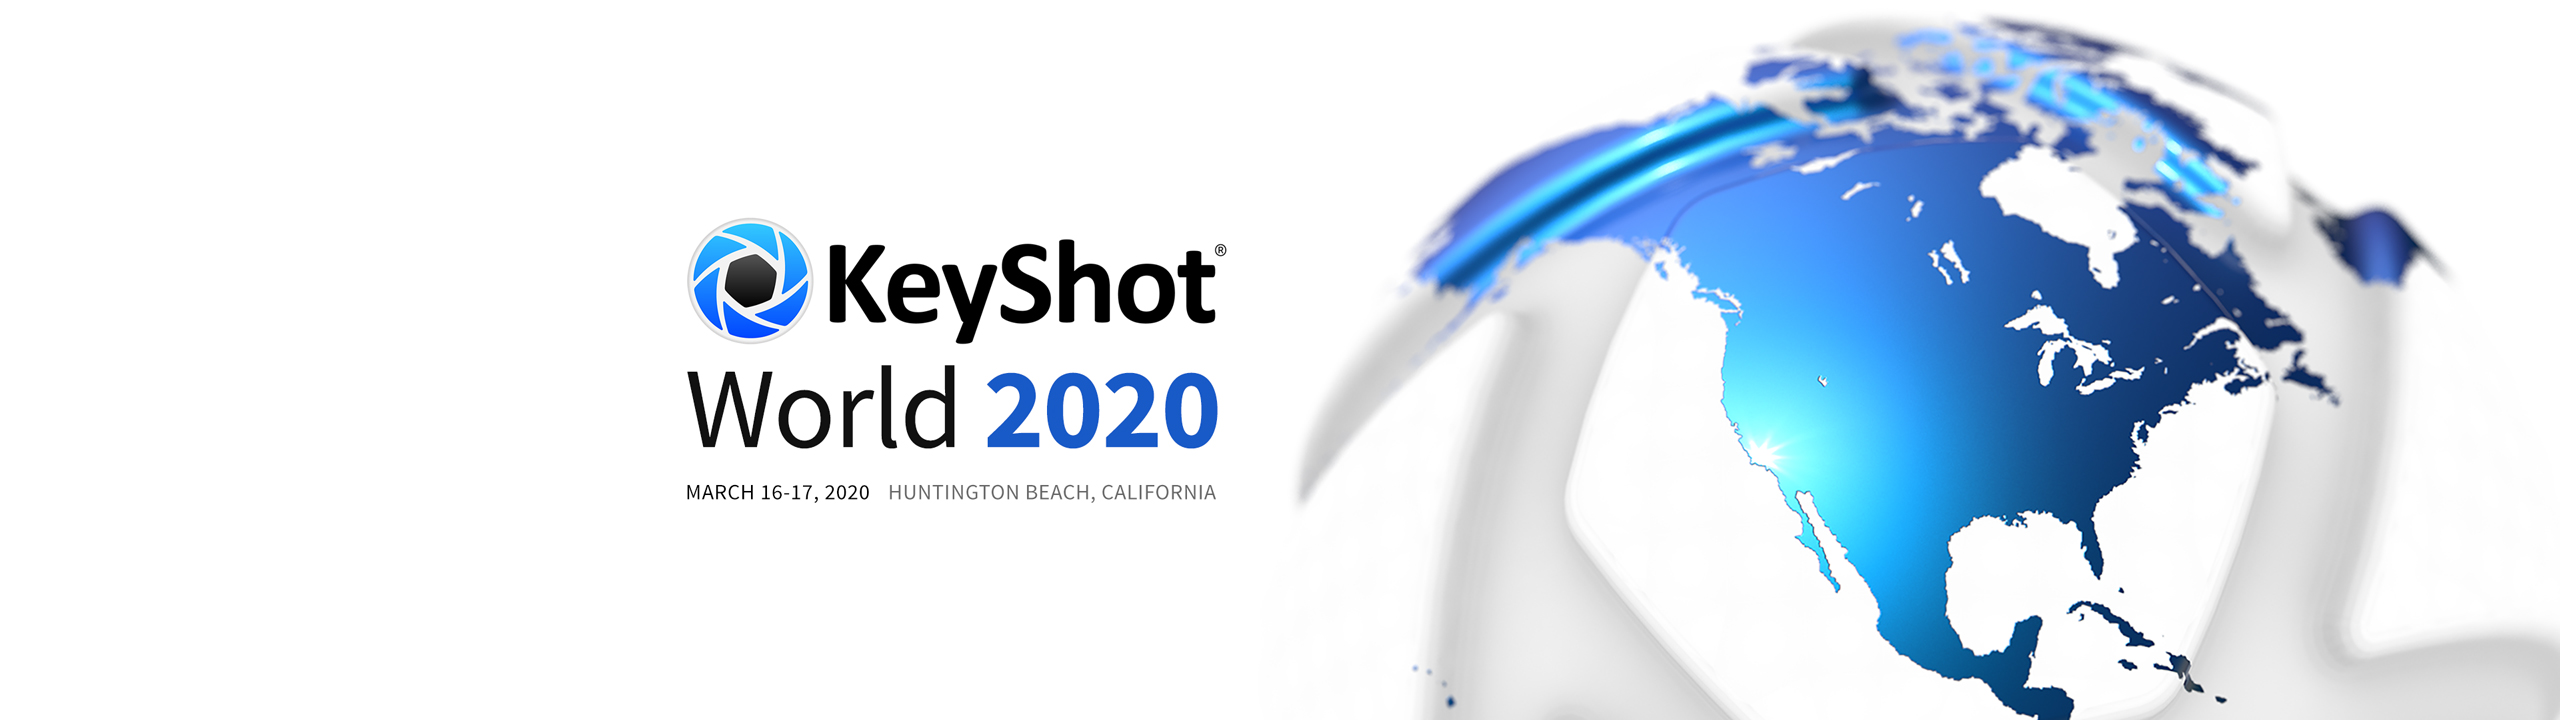 Announcing KeyShot World 2020 | Huntington Beach, CA